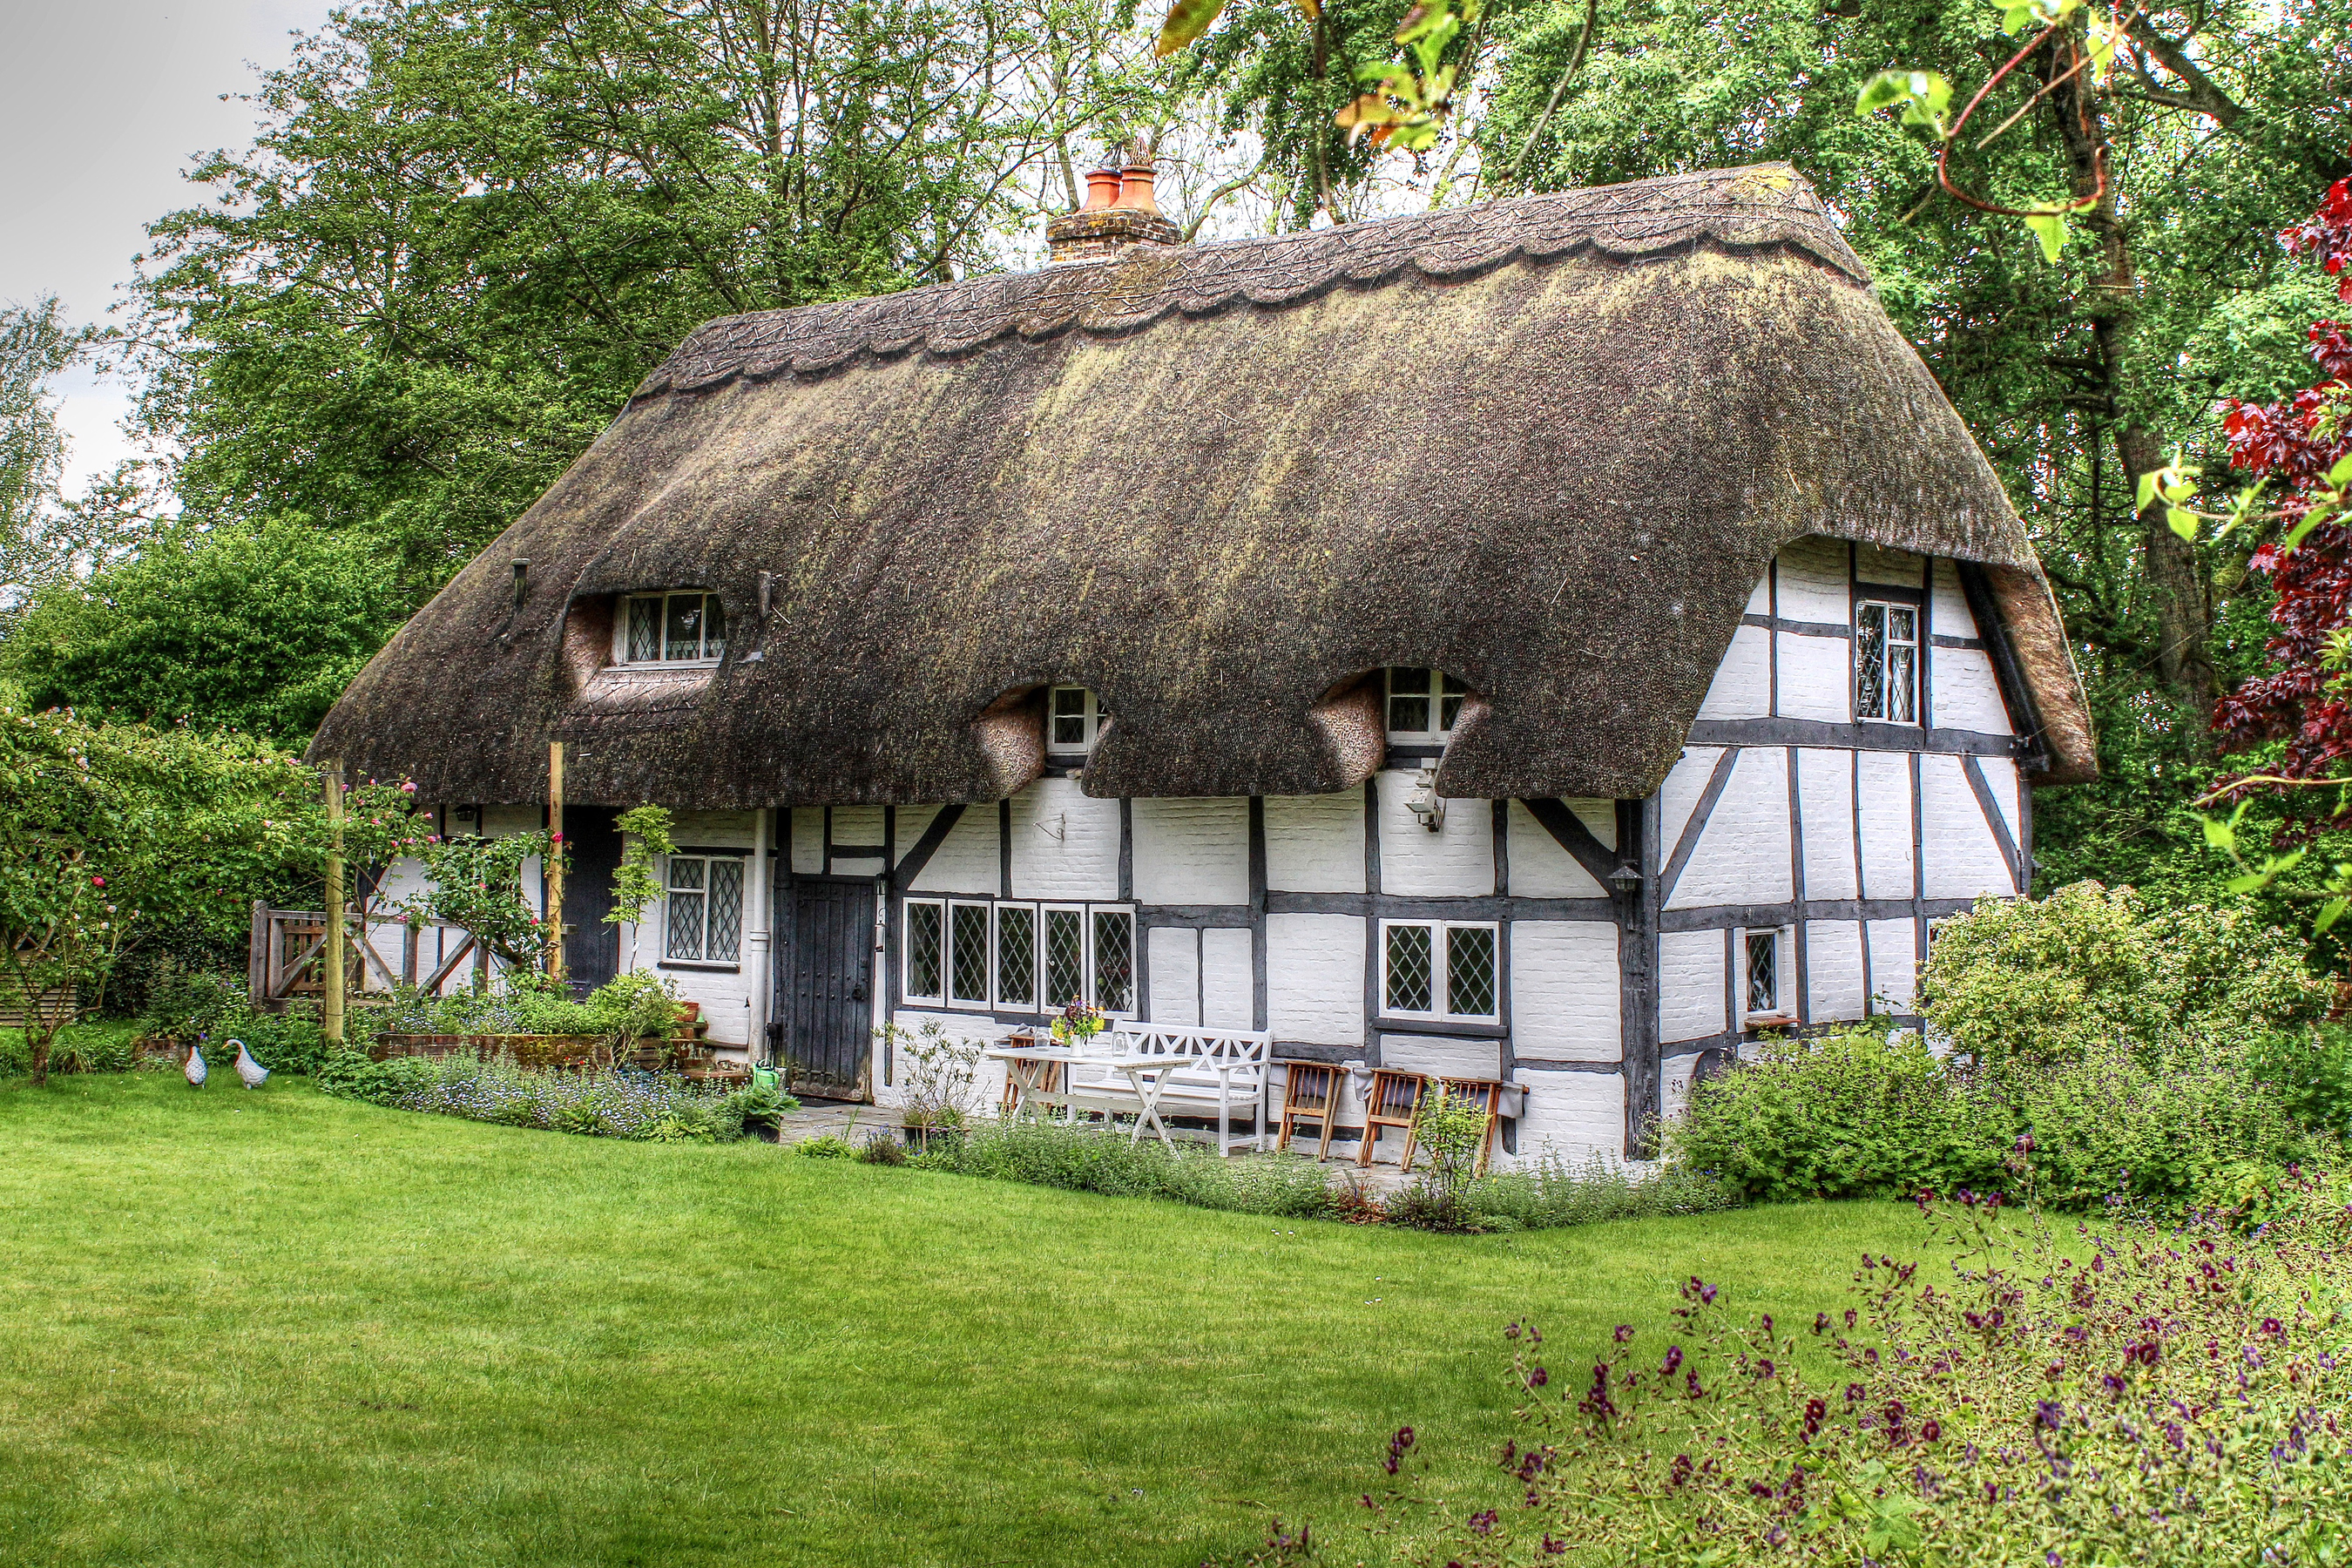 Ин хата. Thatched Cottage in Hampshire England. Традиционное жилище венгров. Фахверк Мазанка. Мазанки домики.